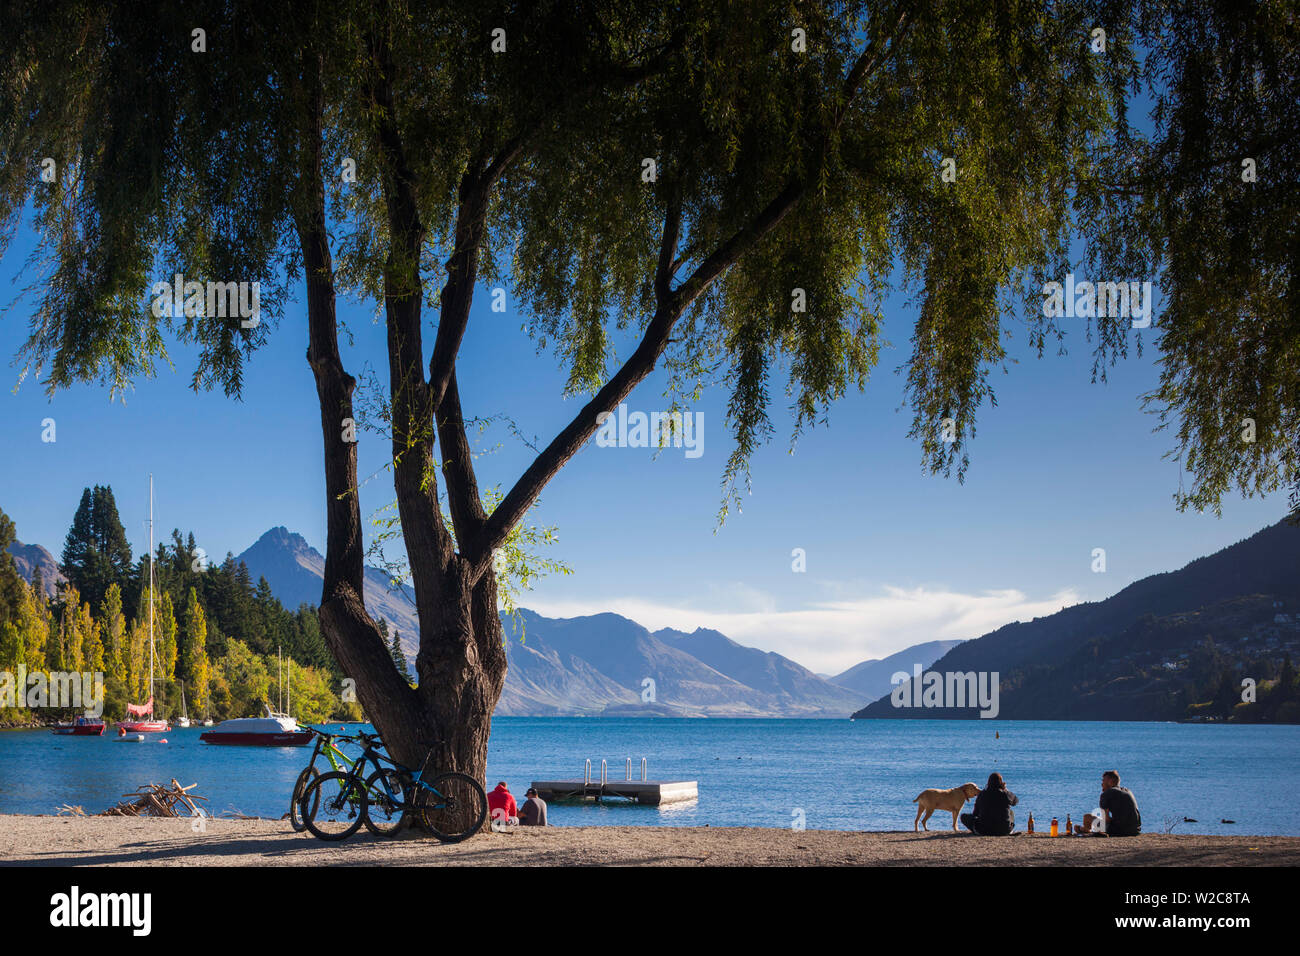 New Zealand, South Island, Otago, Queenstown, people by Lake Wakatipu Stock Photo